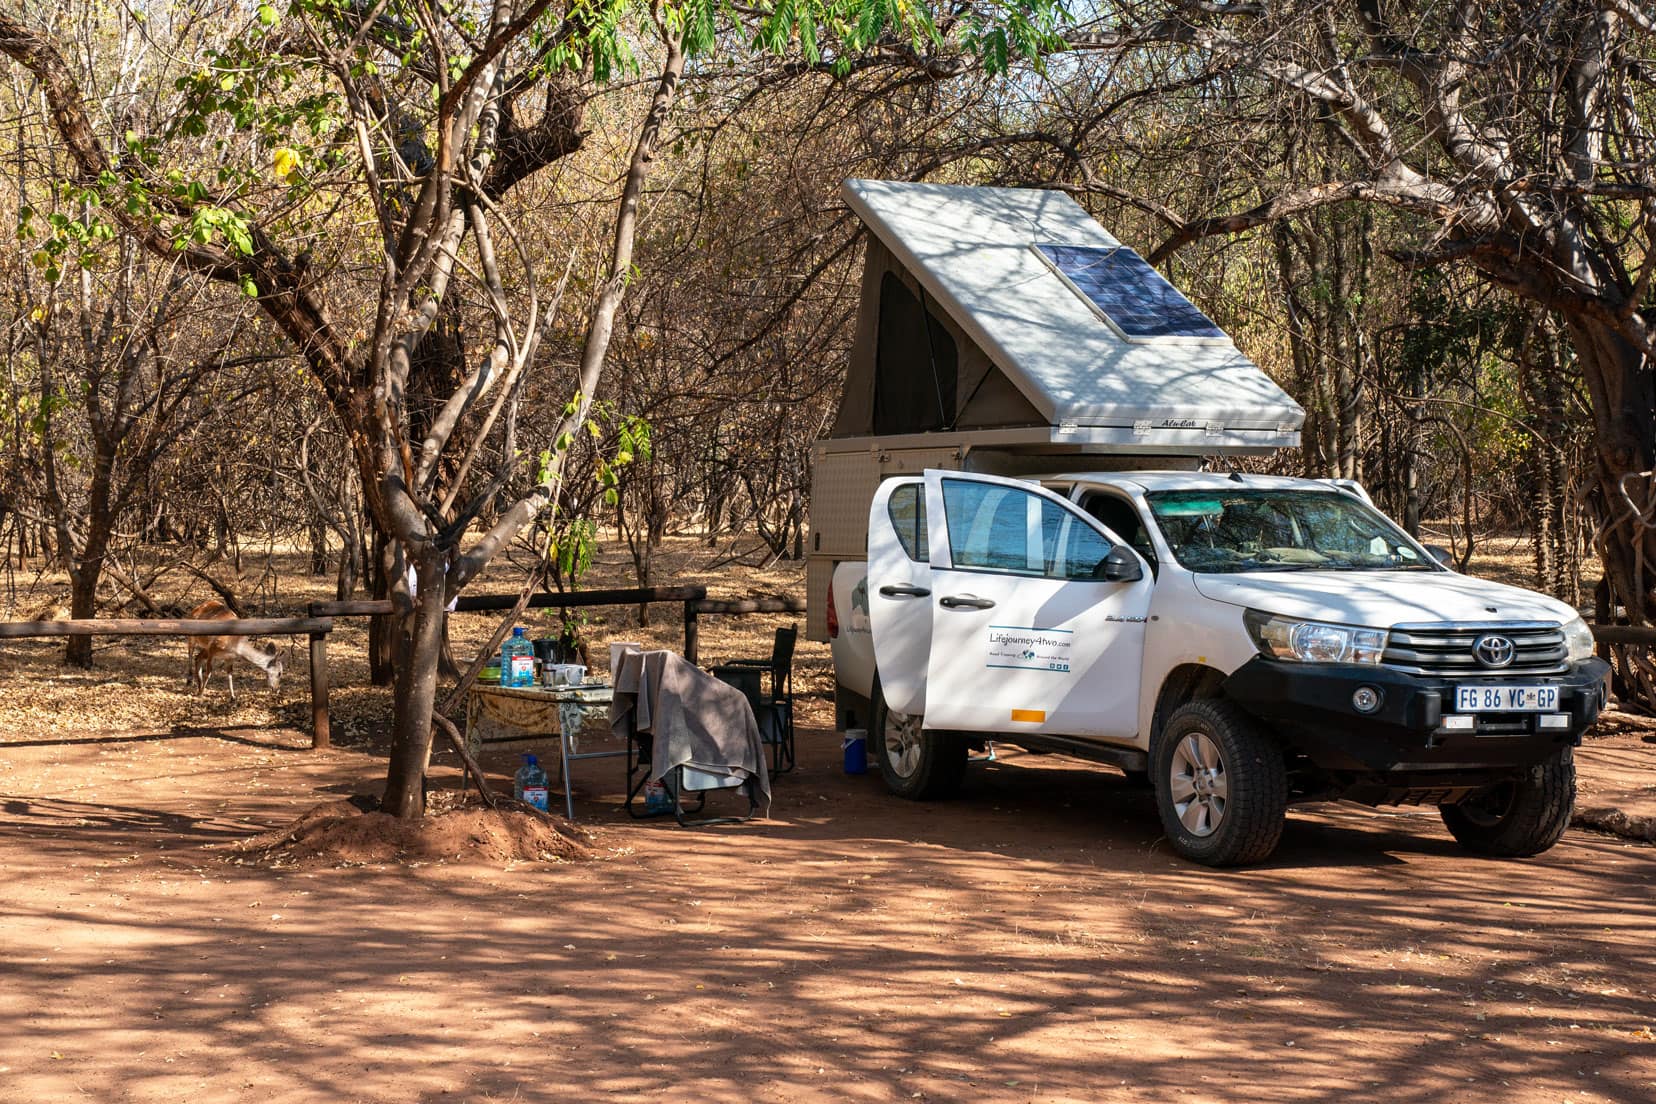 4x4 bush camper with pop up tent in a campsite in Botswana